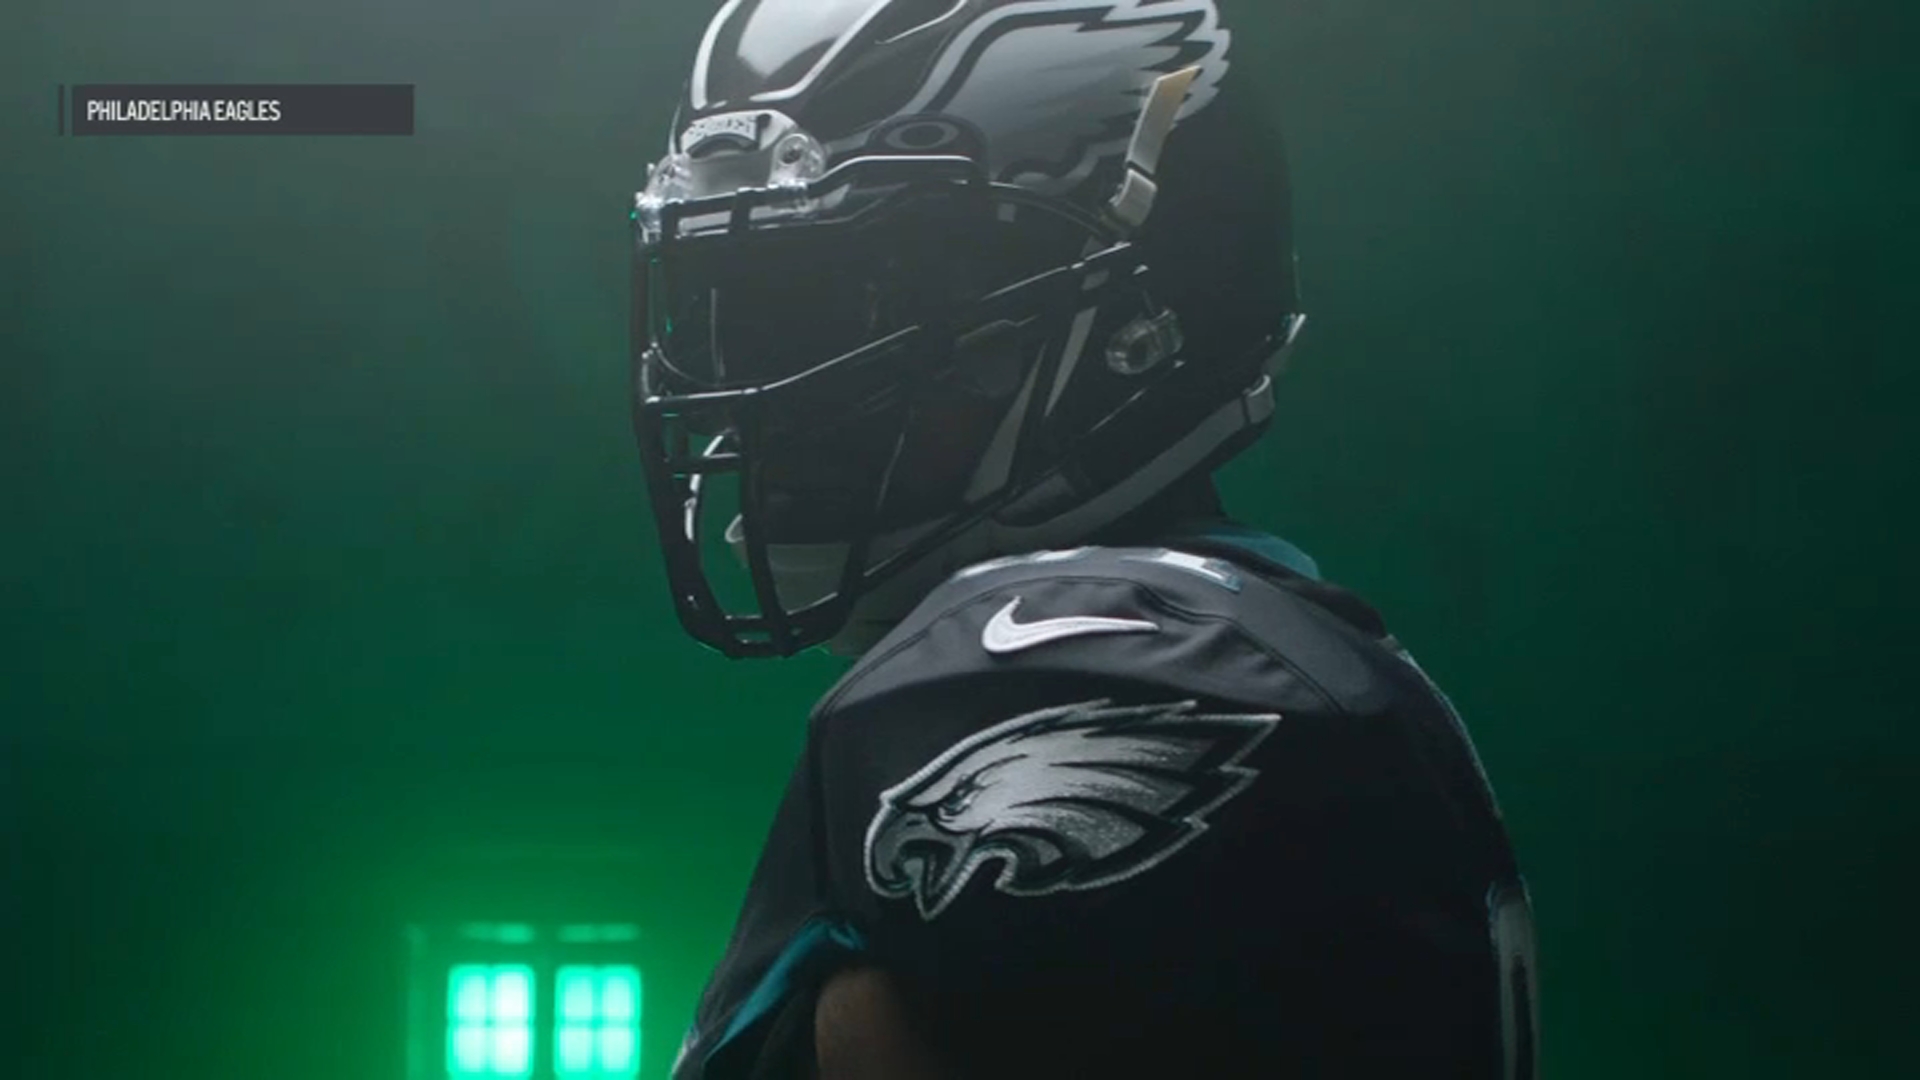 Eagles to debut alternate black helmets for 'SNF' matchup vs